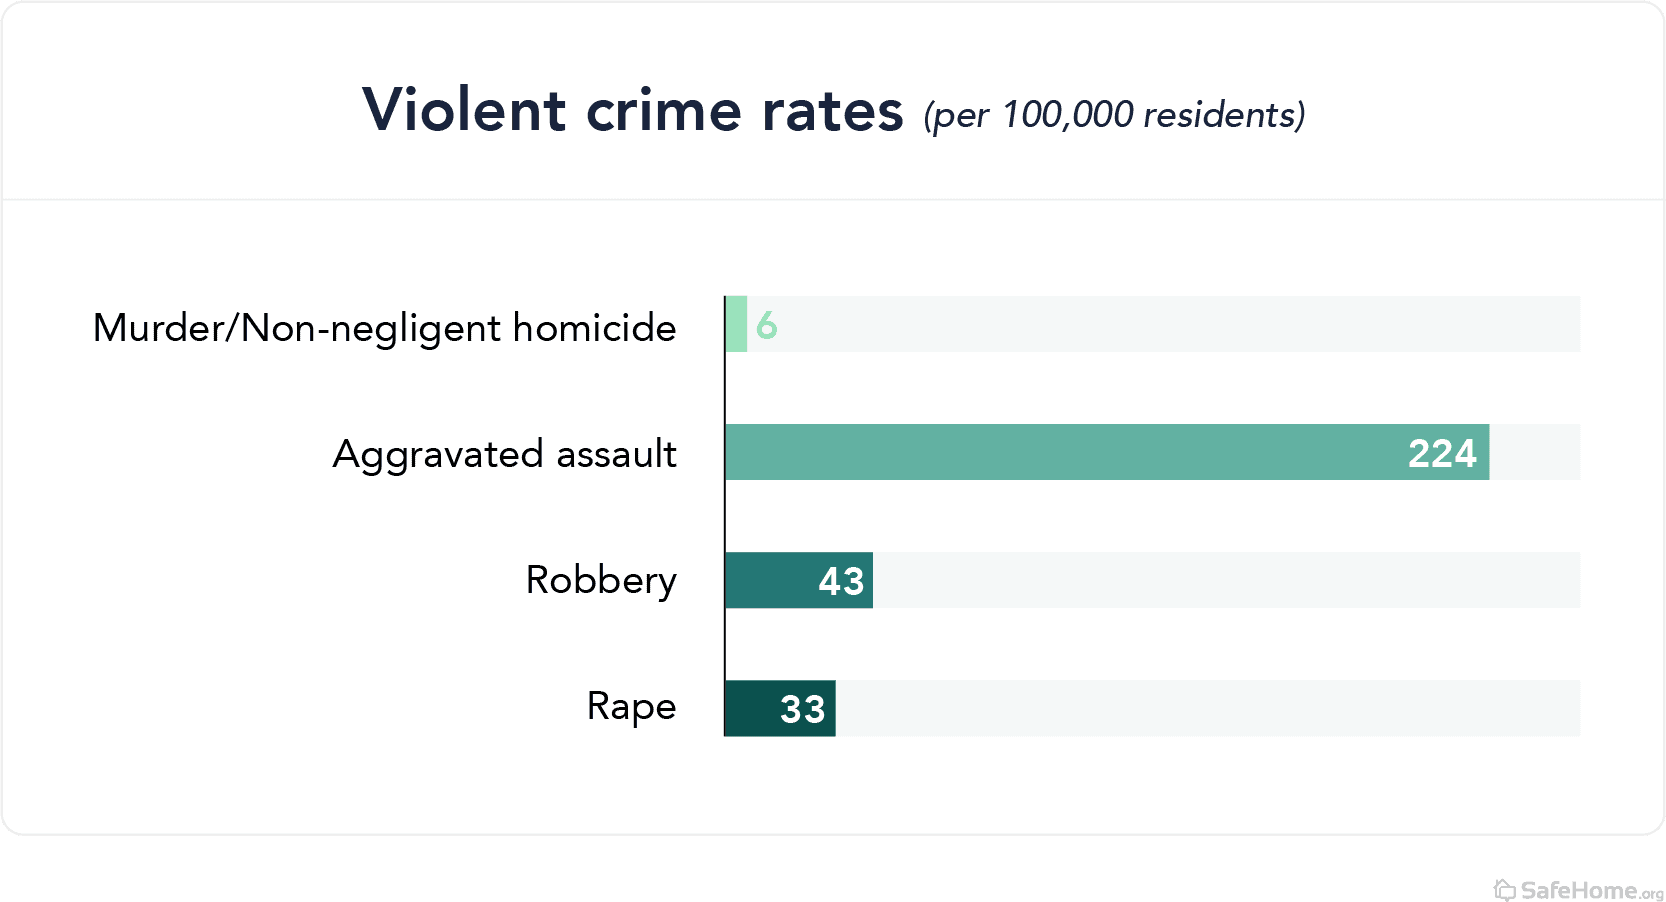 Indiana violent crime rates